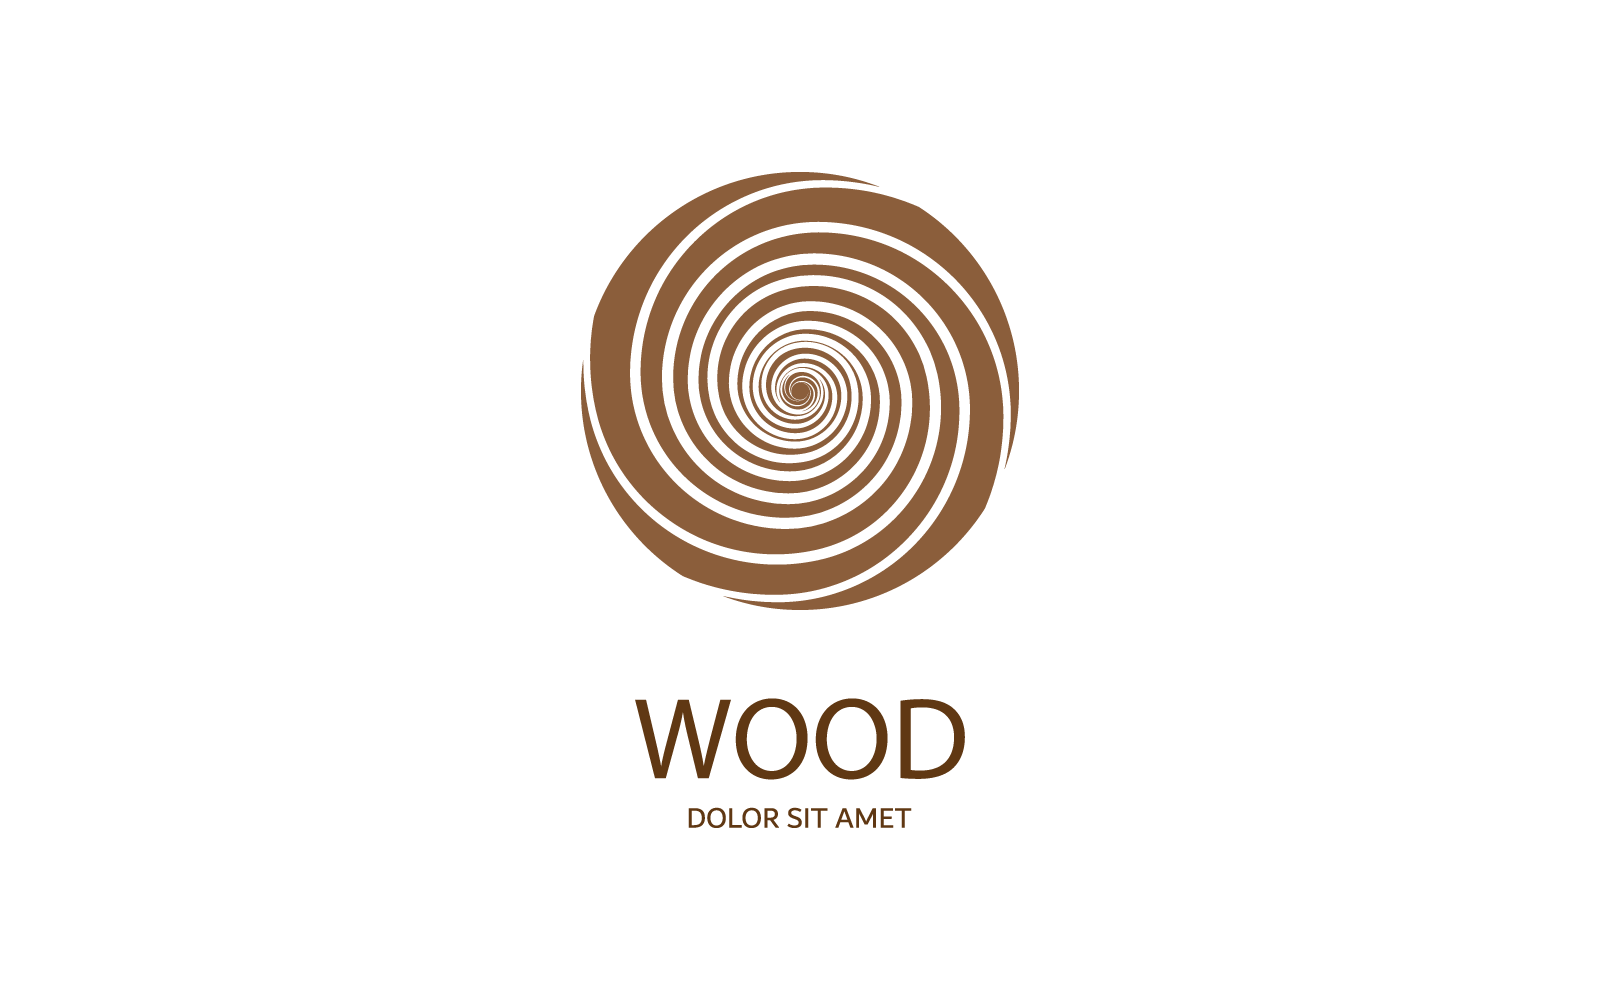 Wood logo vector illustration template